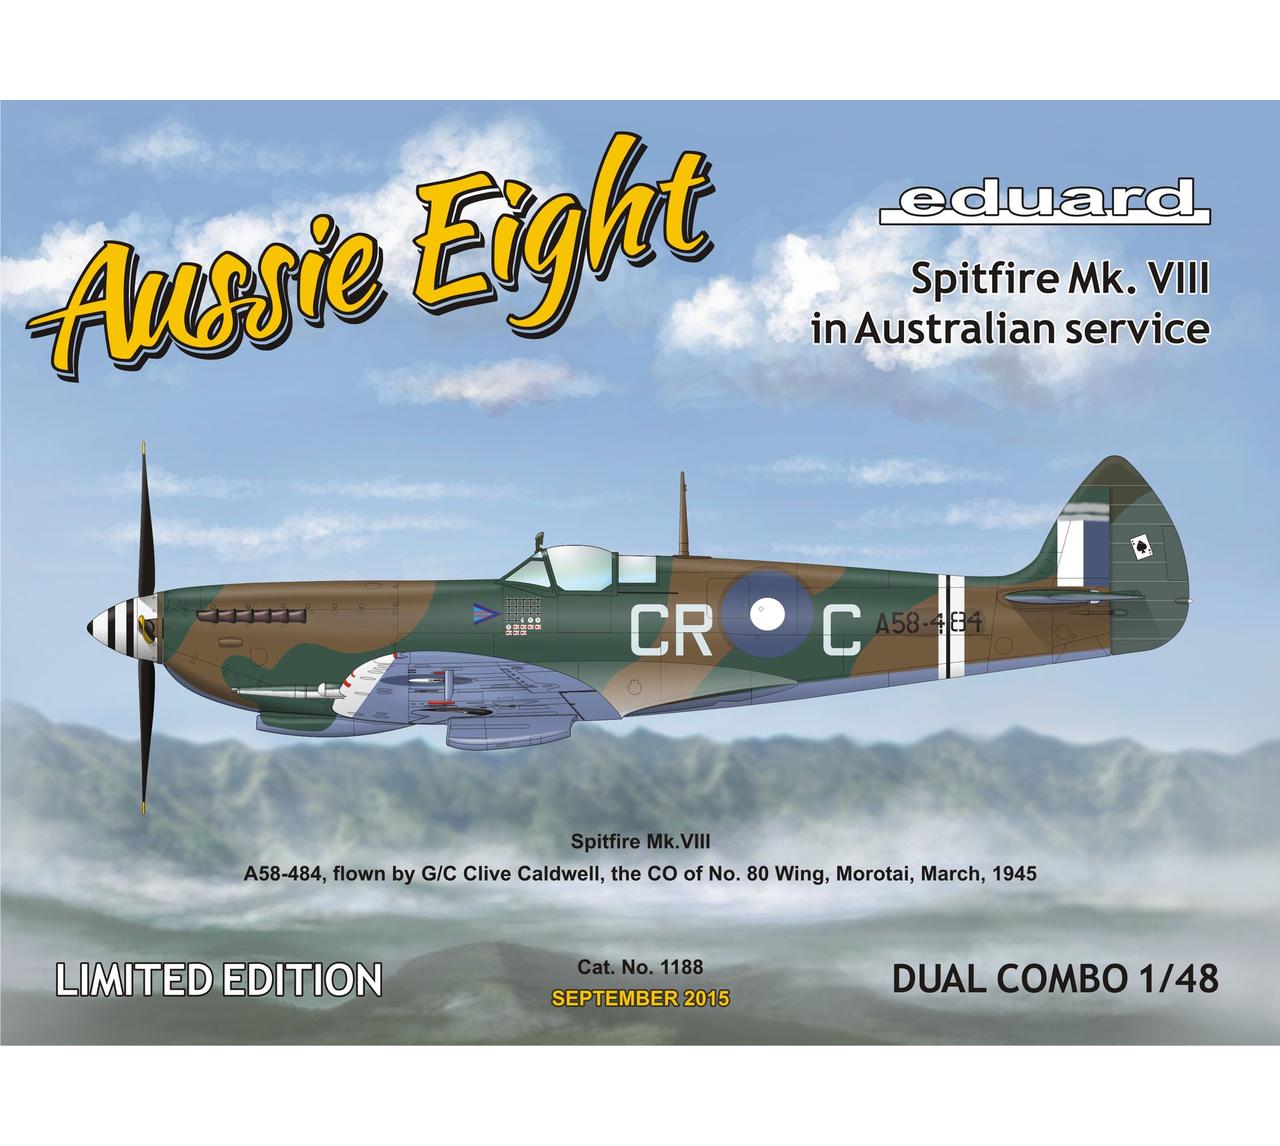 1 - Eduard Spitfire-kavalkad, Aussie Eight #1 klar, Aussie Eight #2 NY!, Bonus: Airfix Spitfire XII - Sida 12 01